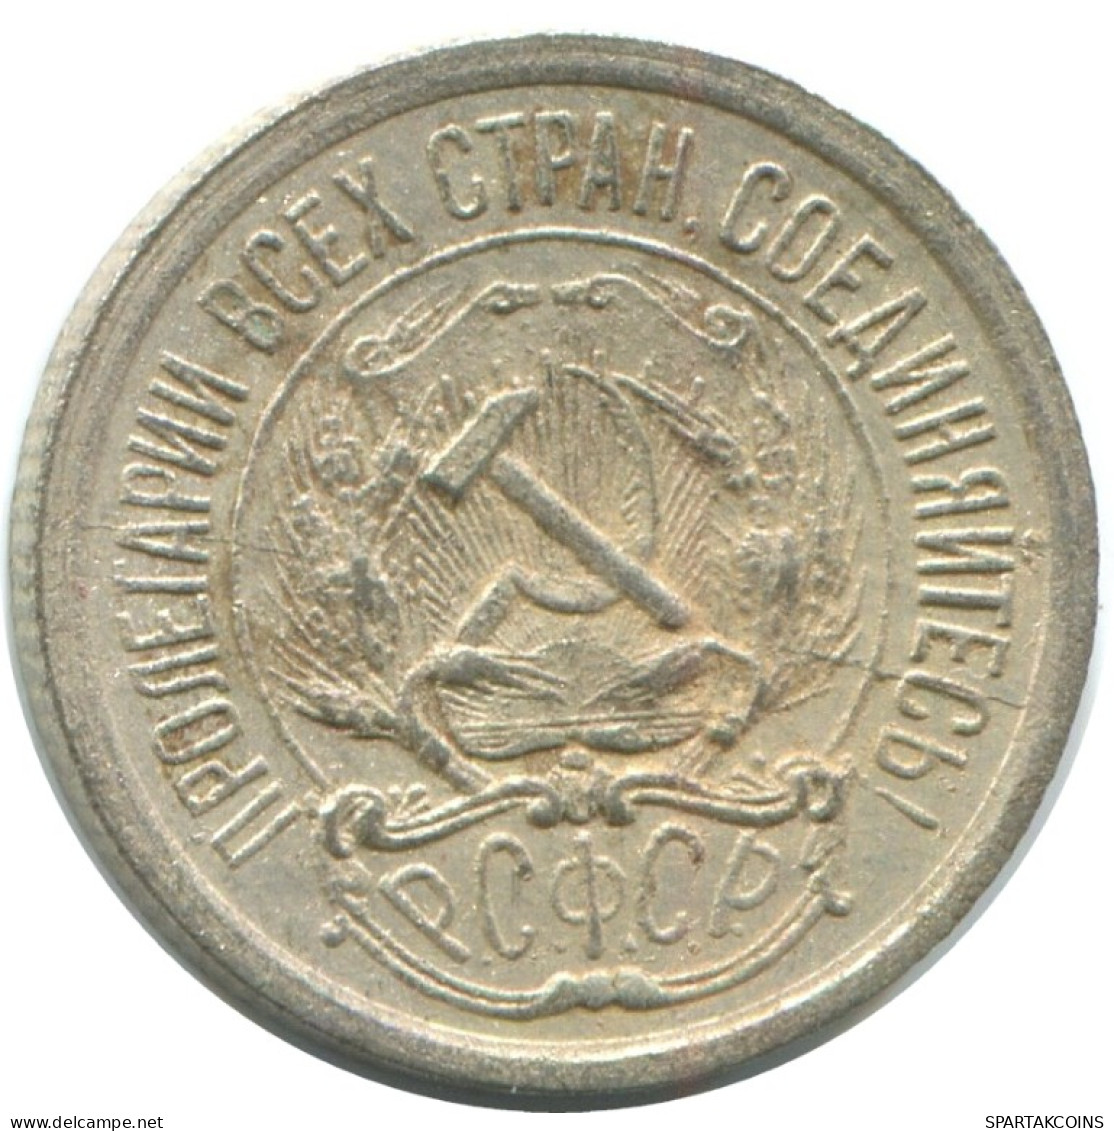 10 KOPEKS 1923 RUSIA RUSSIA RSFSR PLATA Moneda HIGH GRADE #AE933.4.E.A - Rusia